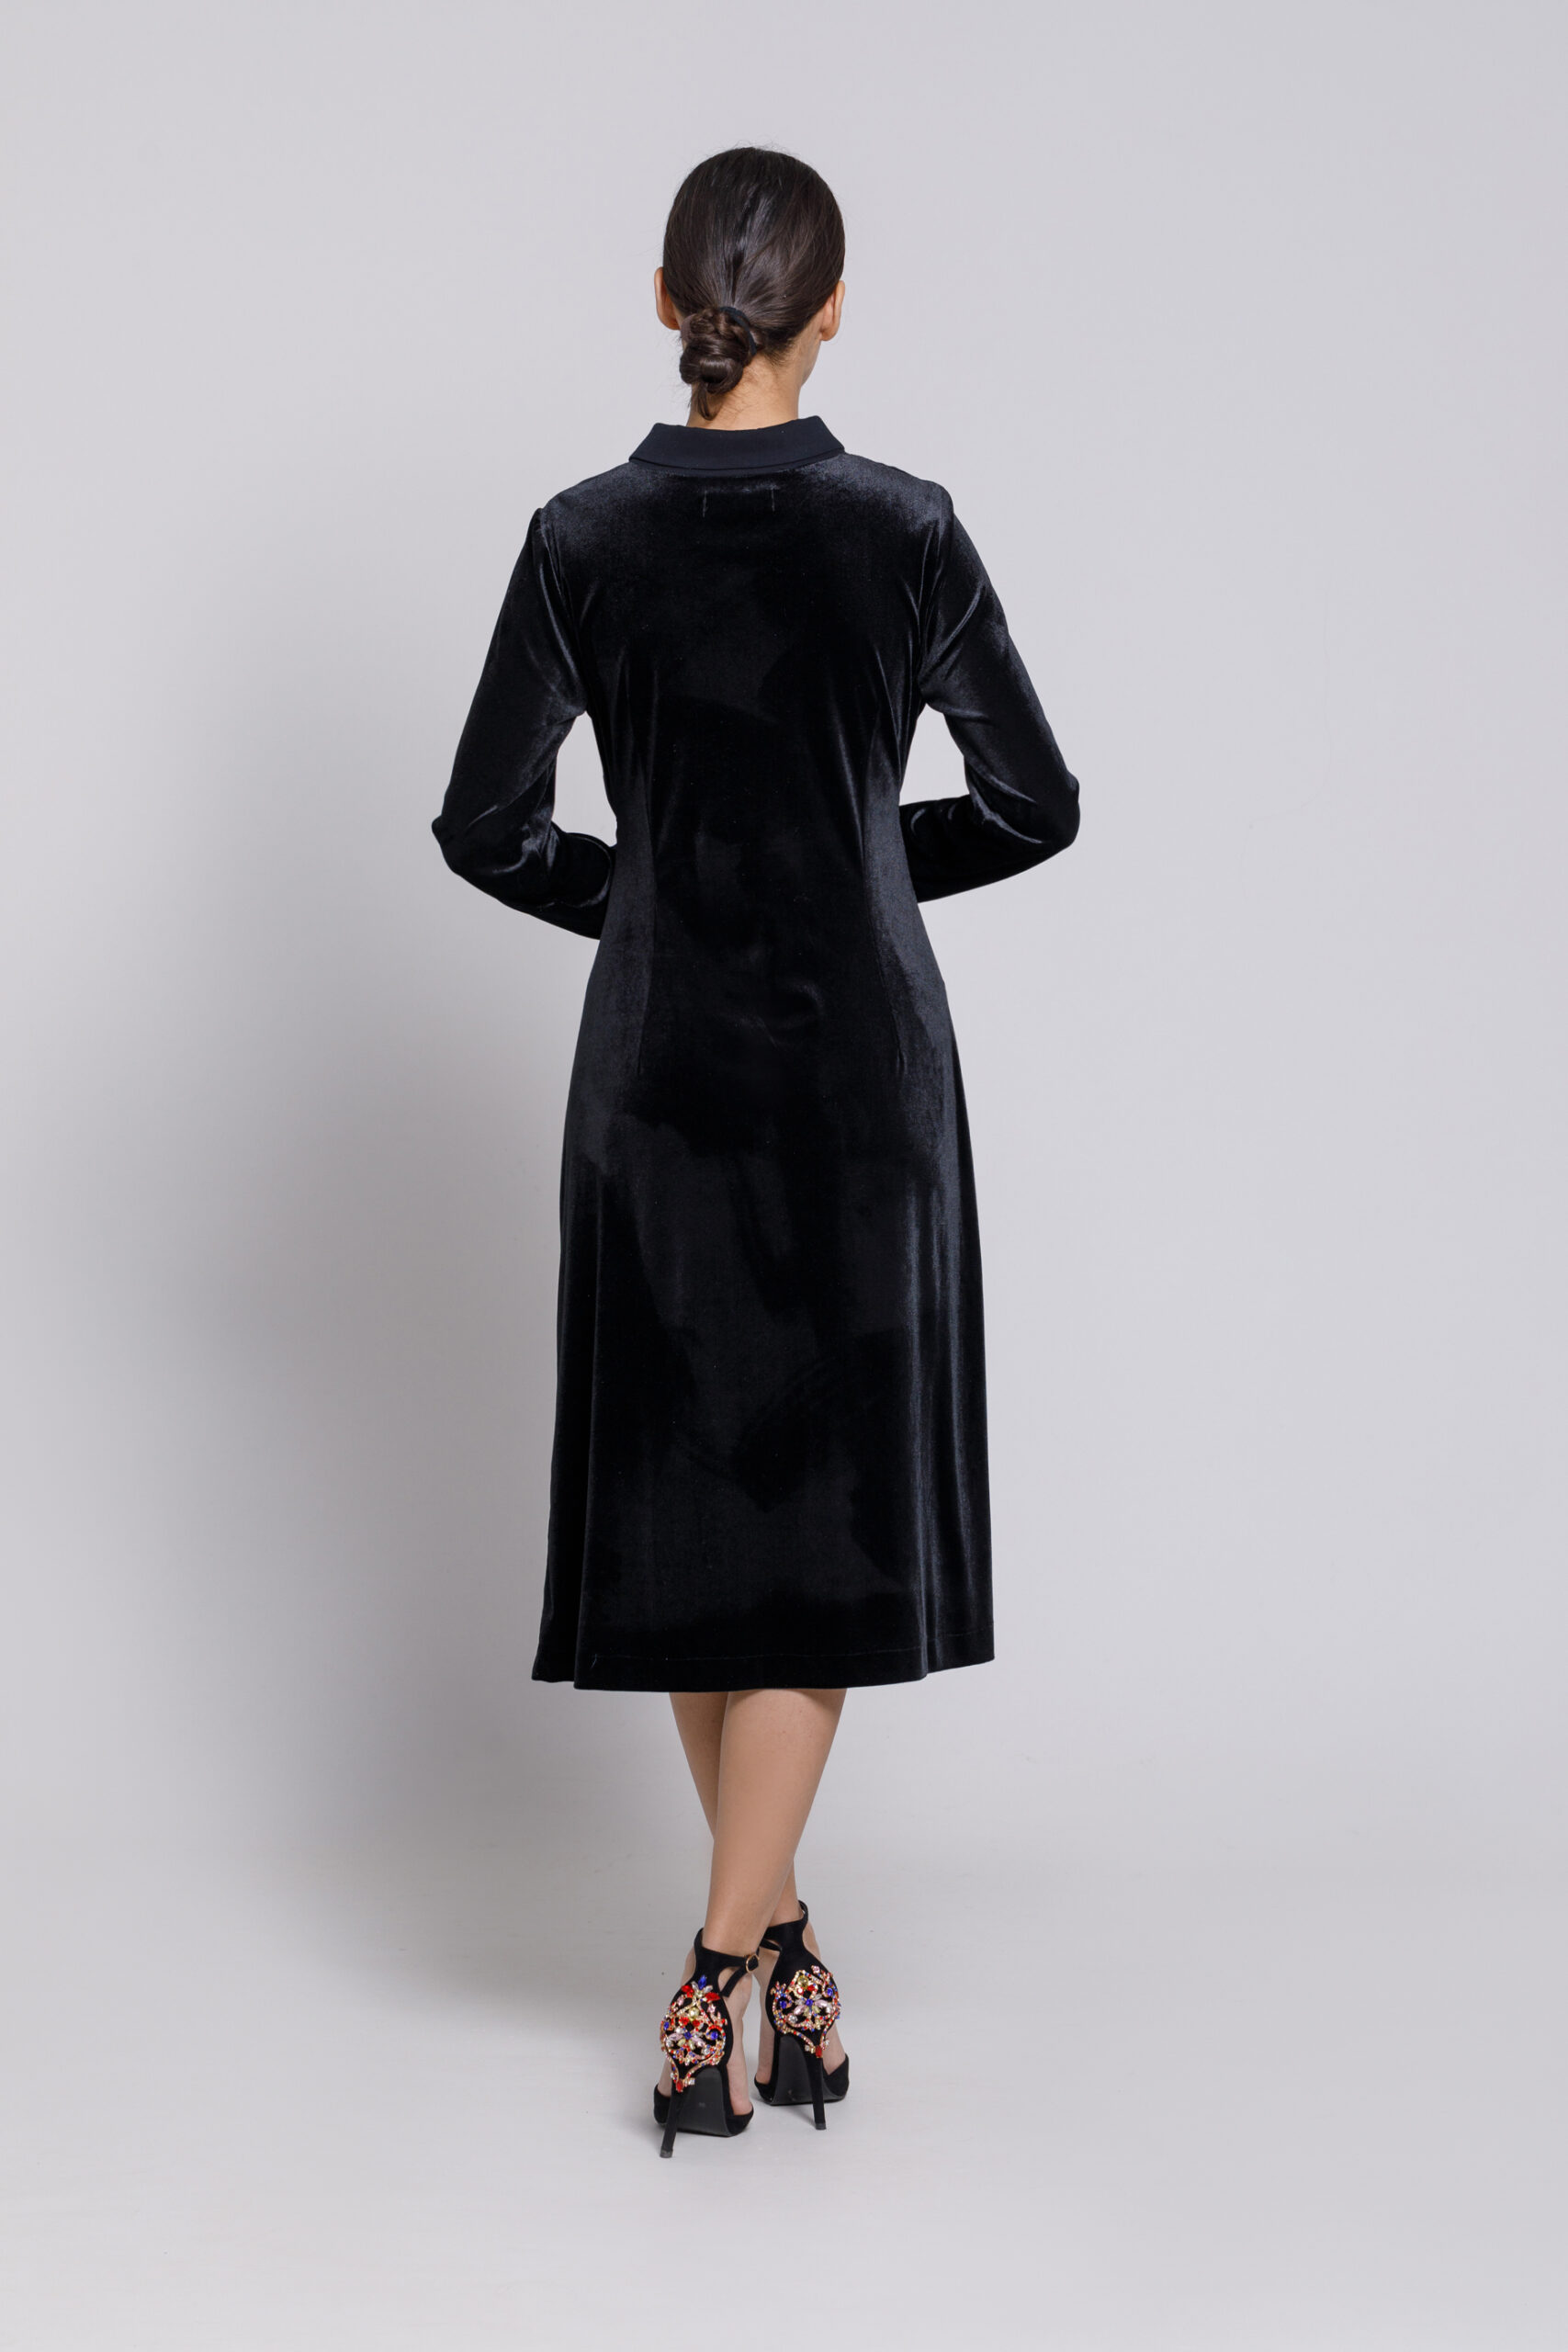 STORY dress in black velvet and viscose. Natural fabrics, original design, handmade embroidery